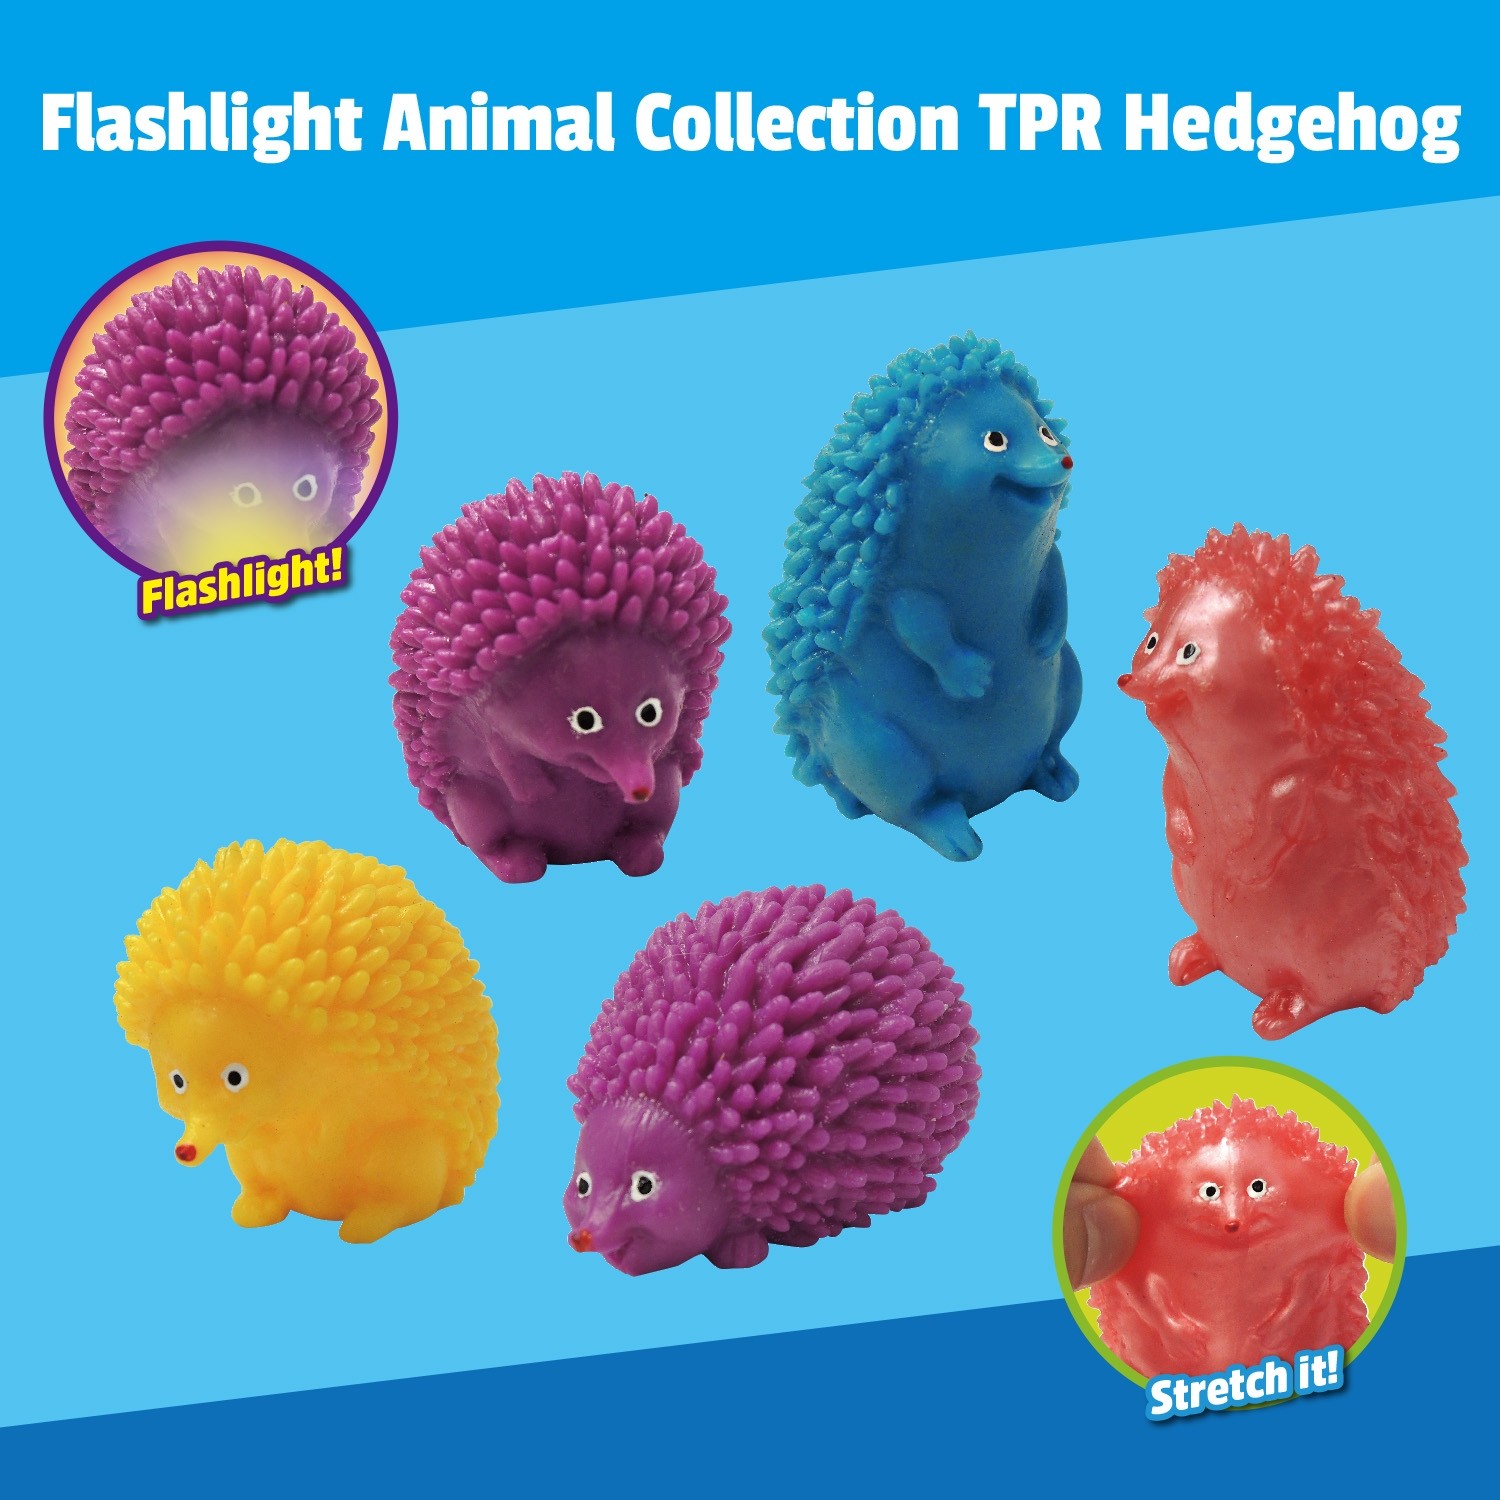 "Flashlight Animal Collection" TPR Hedgehog